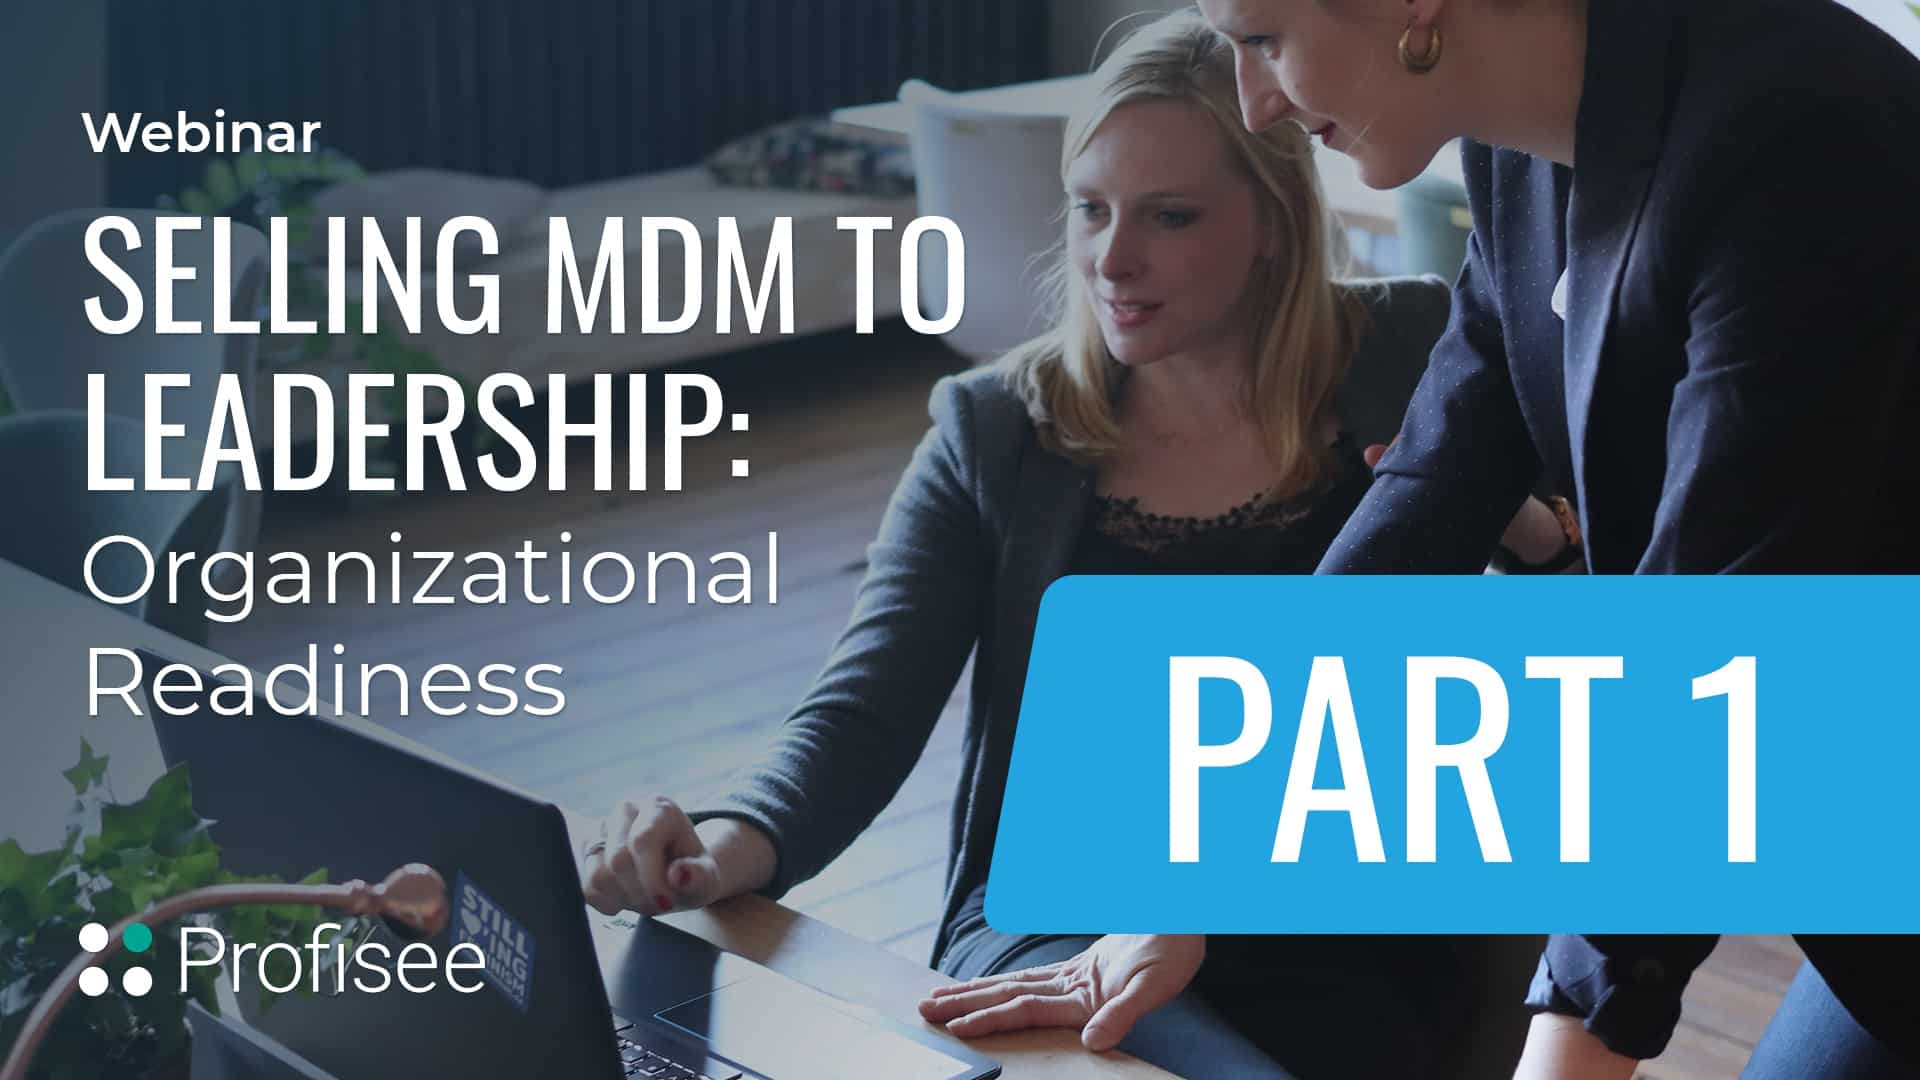 Profisee: Selling MDM To Leadership Pt. 1: Organizational Readiness